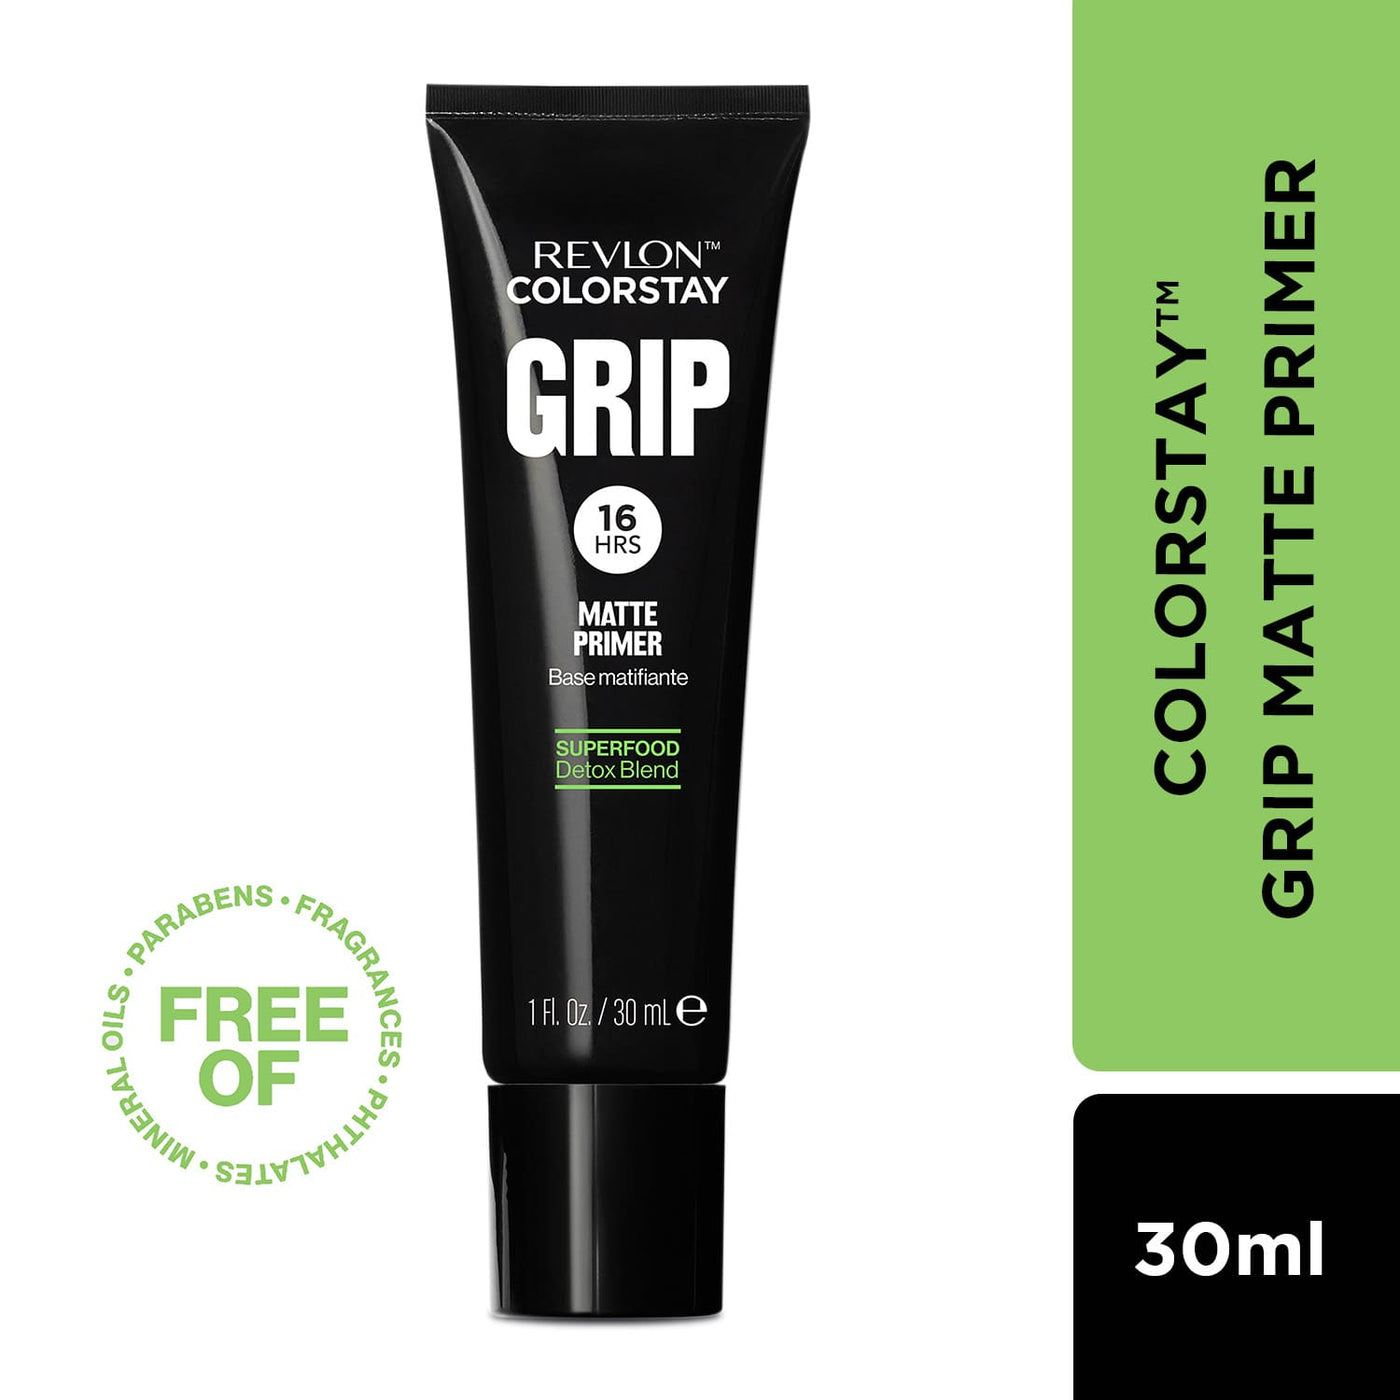 ColorStay™ Grip Matte Primer - Revlon